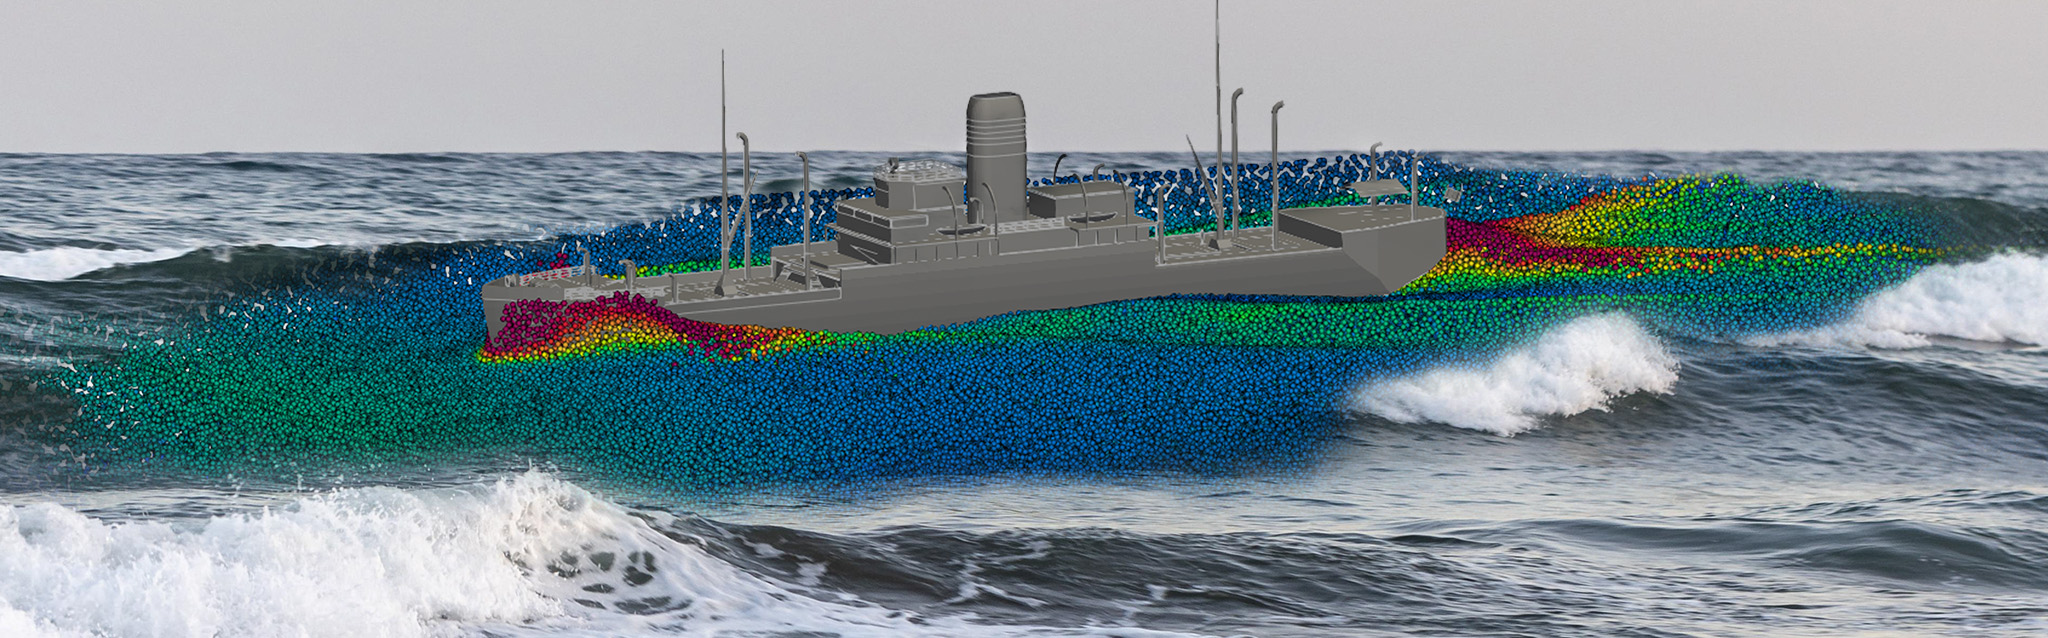 MESHFREE Maritime Industry Simulation